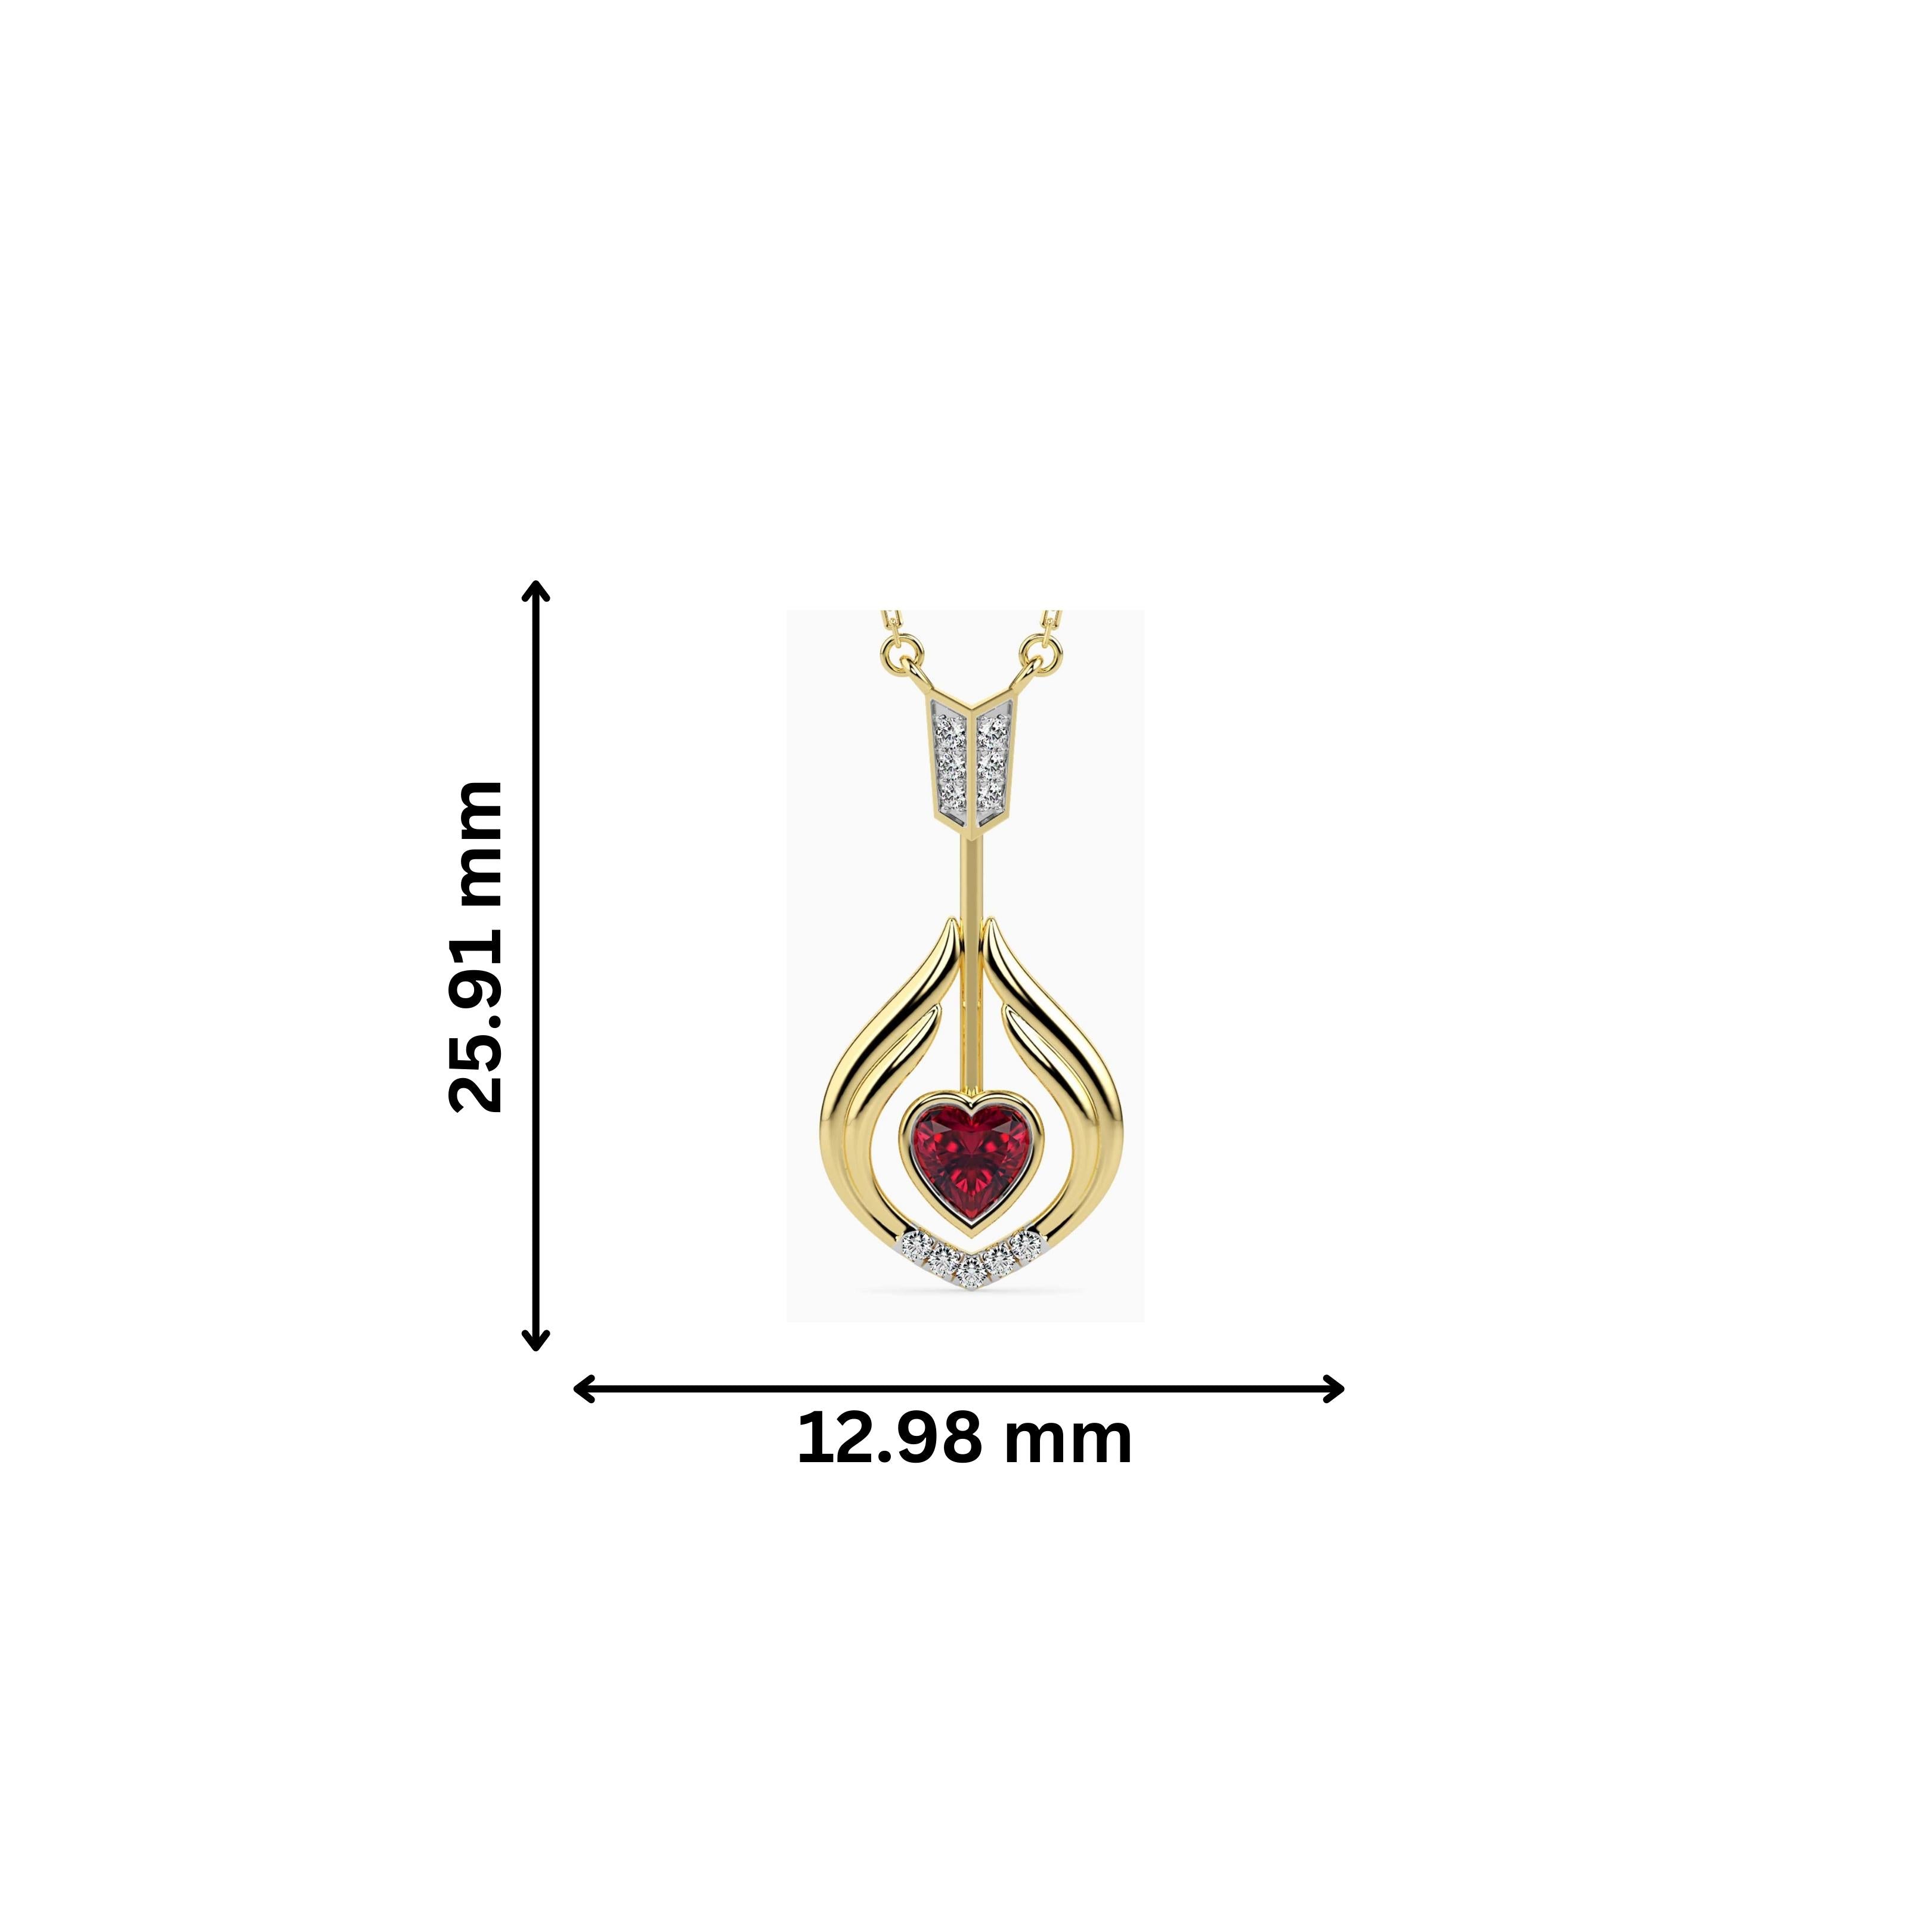 Avocation lab grown diamond pendant designs for female Fiona Diamonds